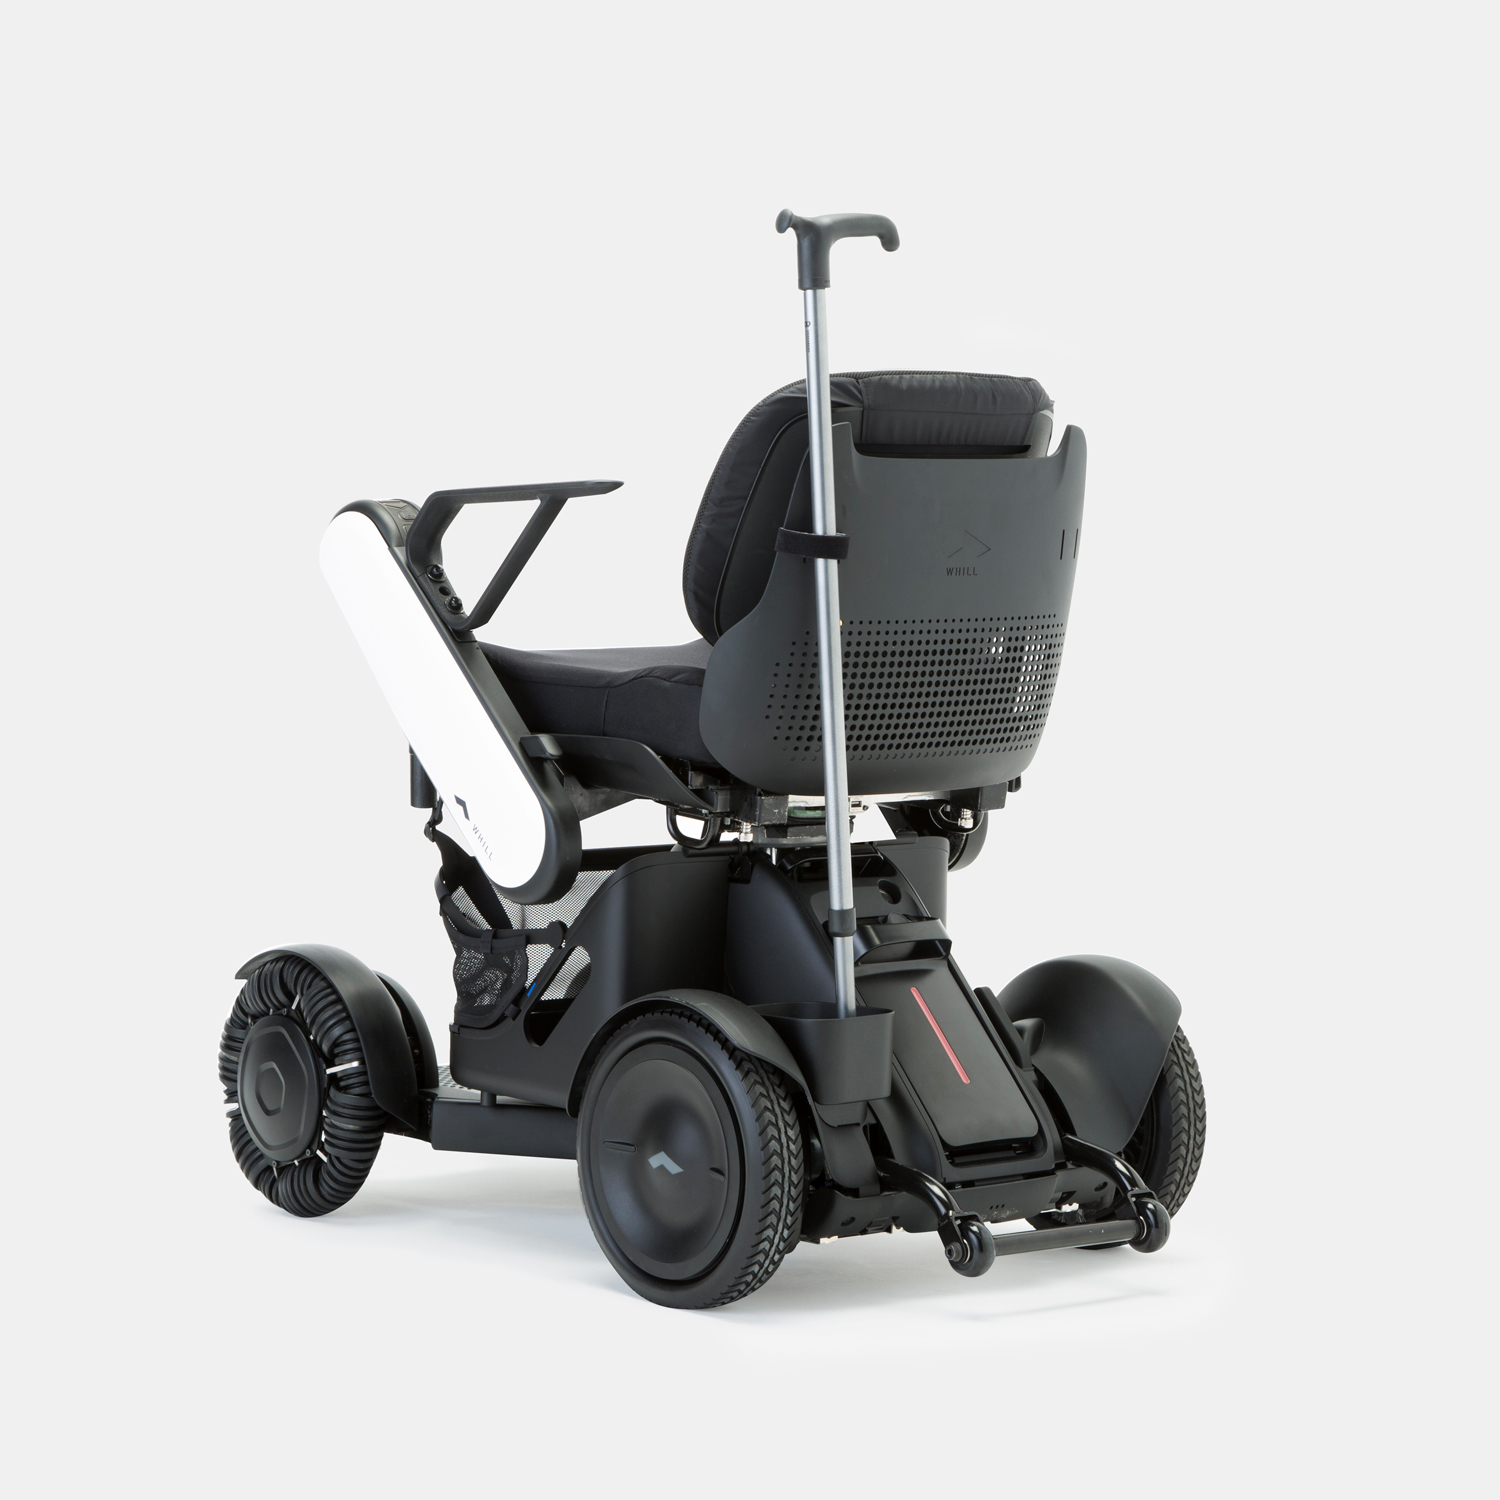 次世代型電動車椅子の付属品 | 次世代型電動車椅子 近距離モビリティ ...